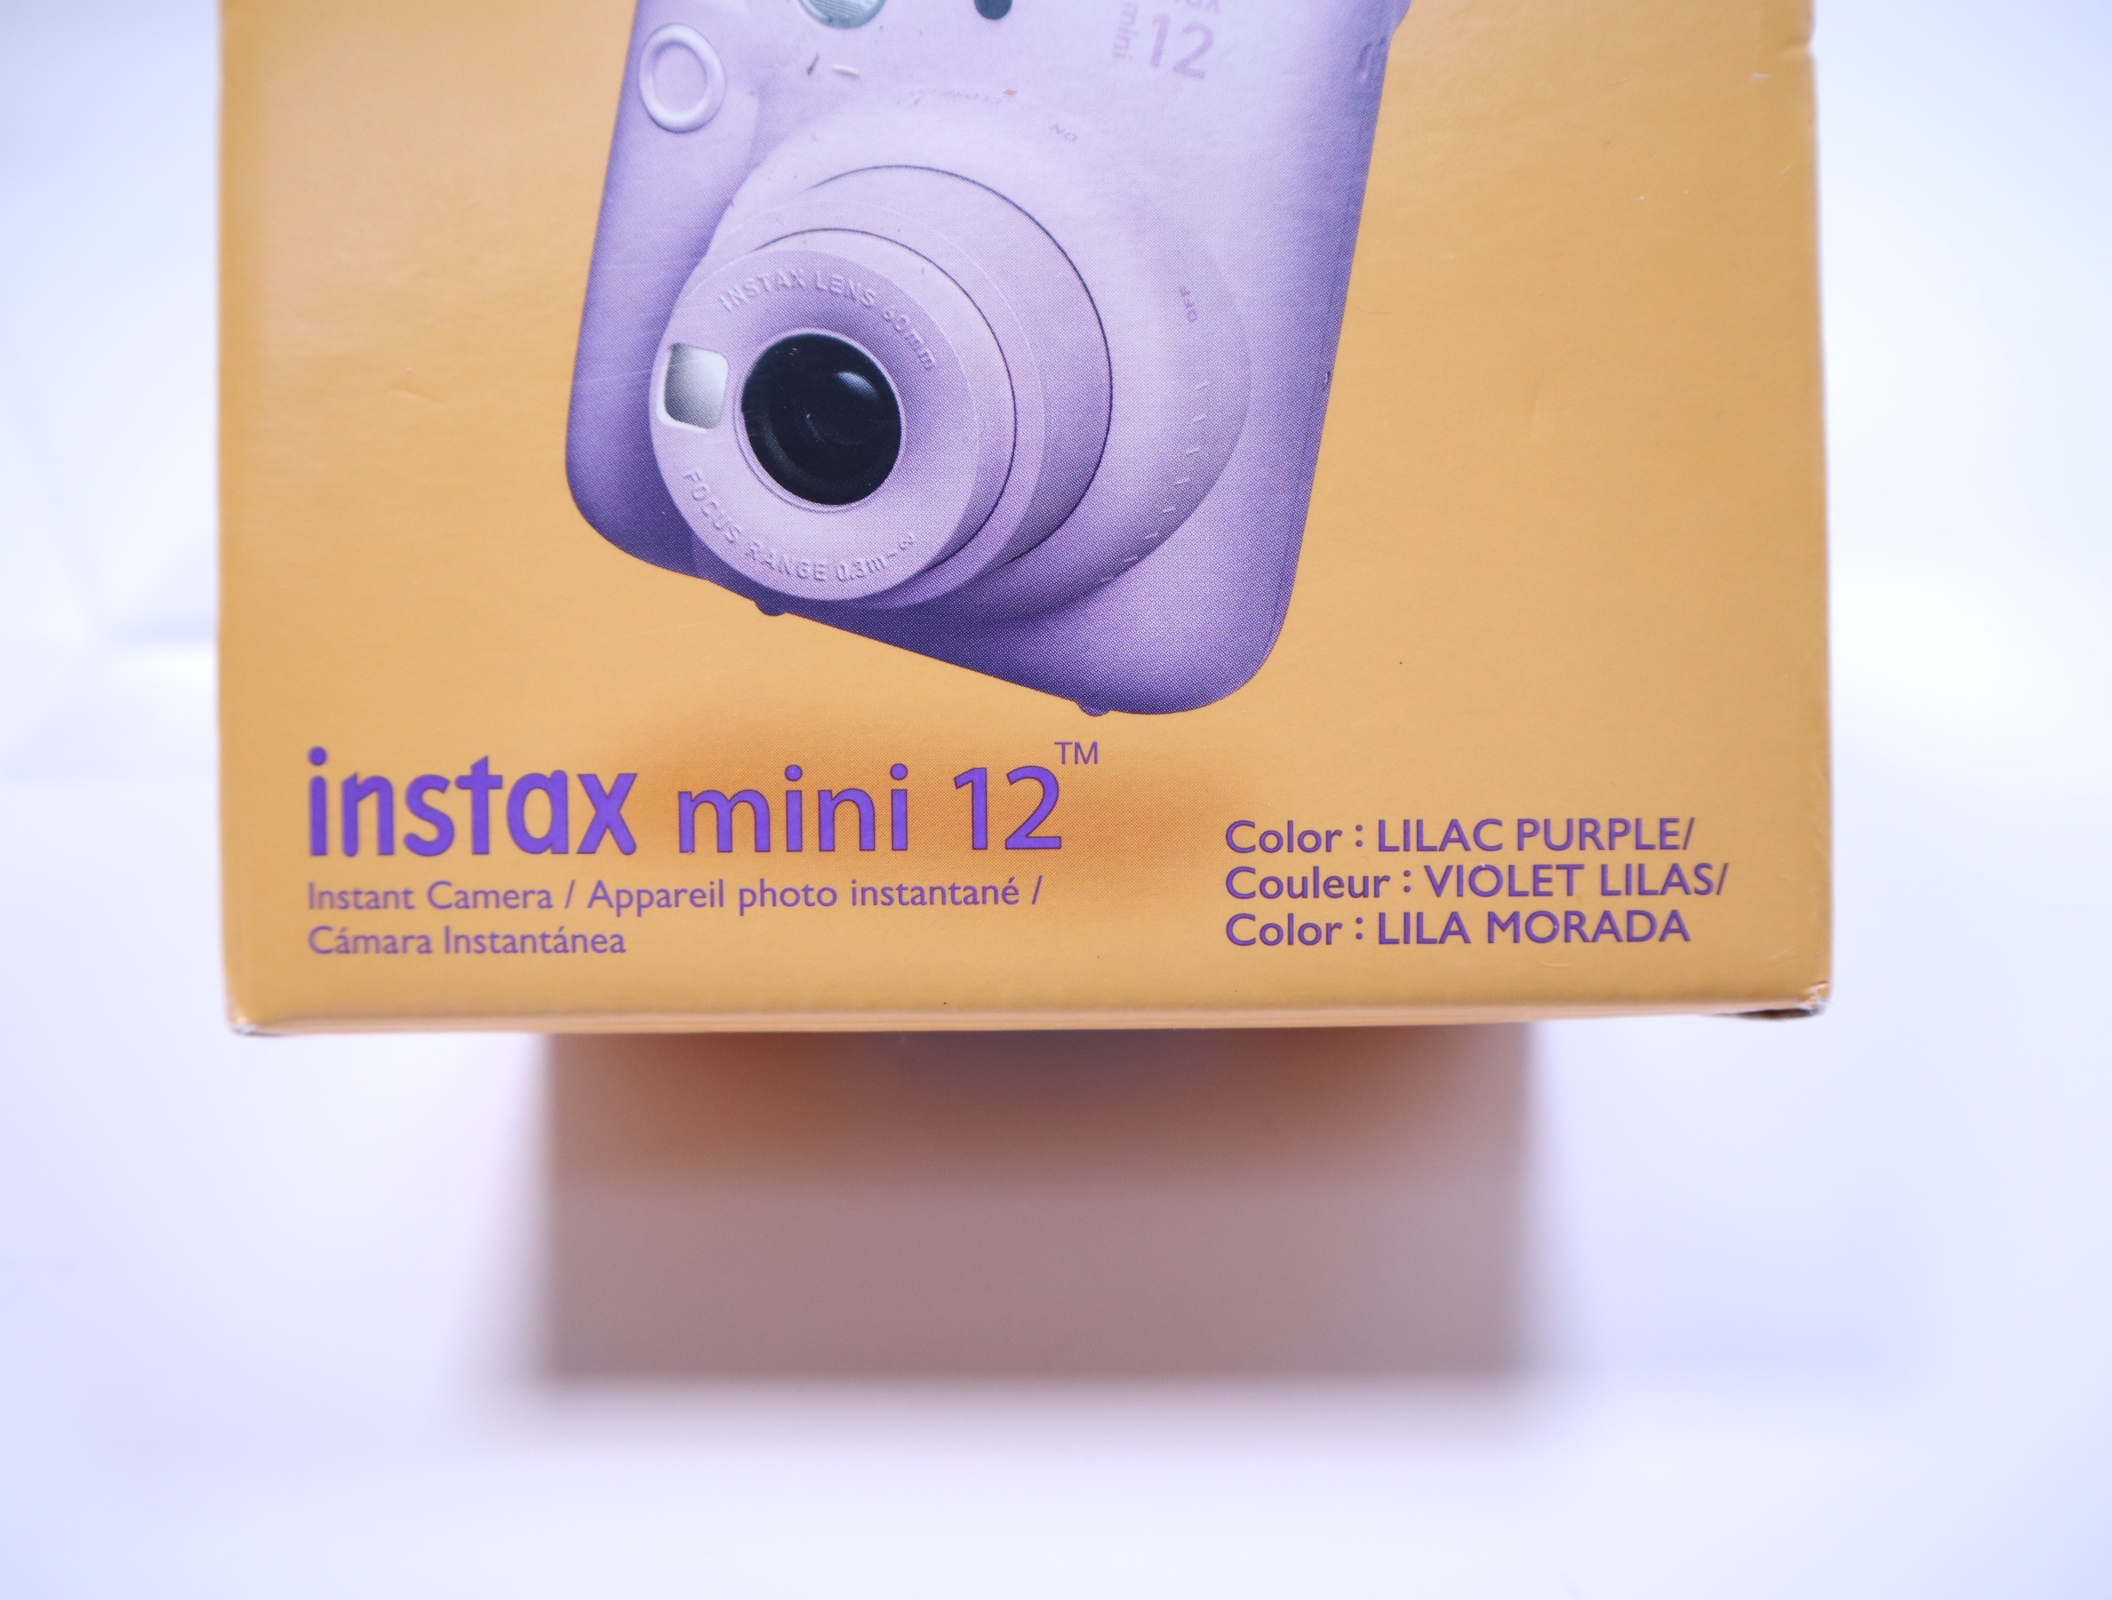 Fuji Instax Mini 40 Instant Film Camera - Parallax Photographic